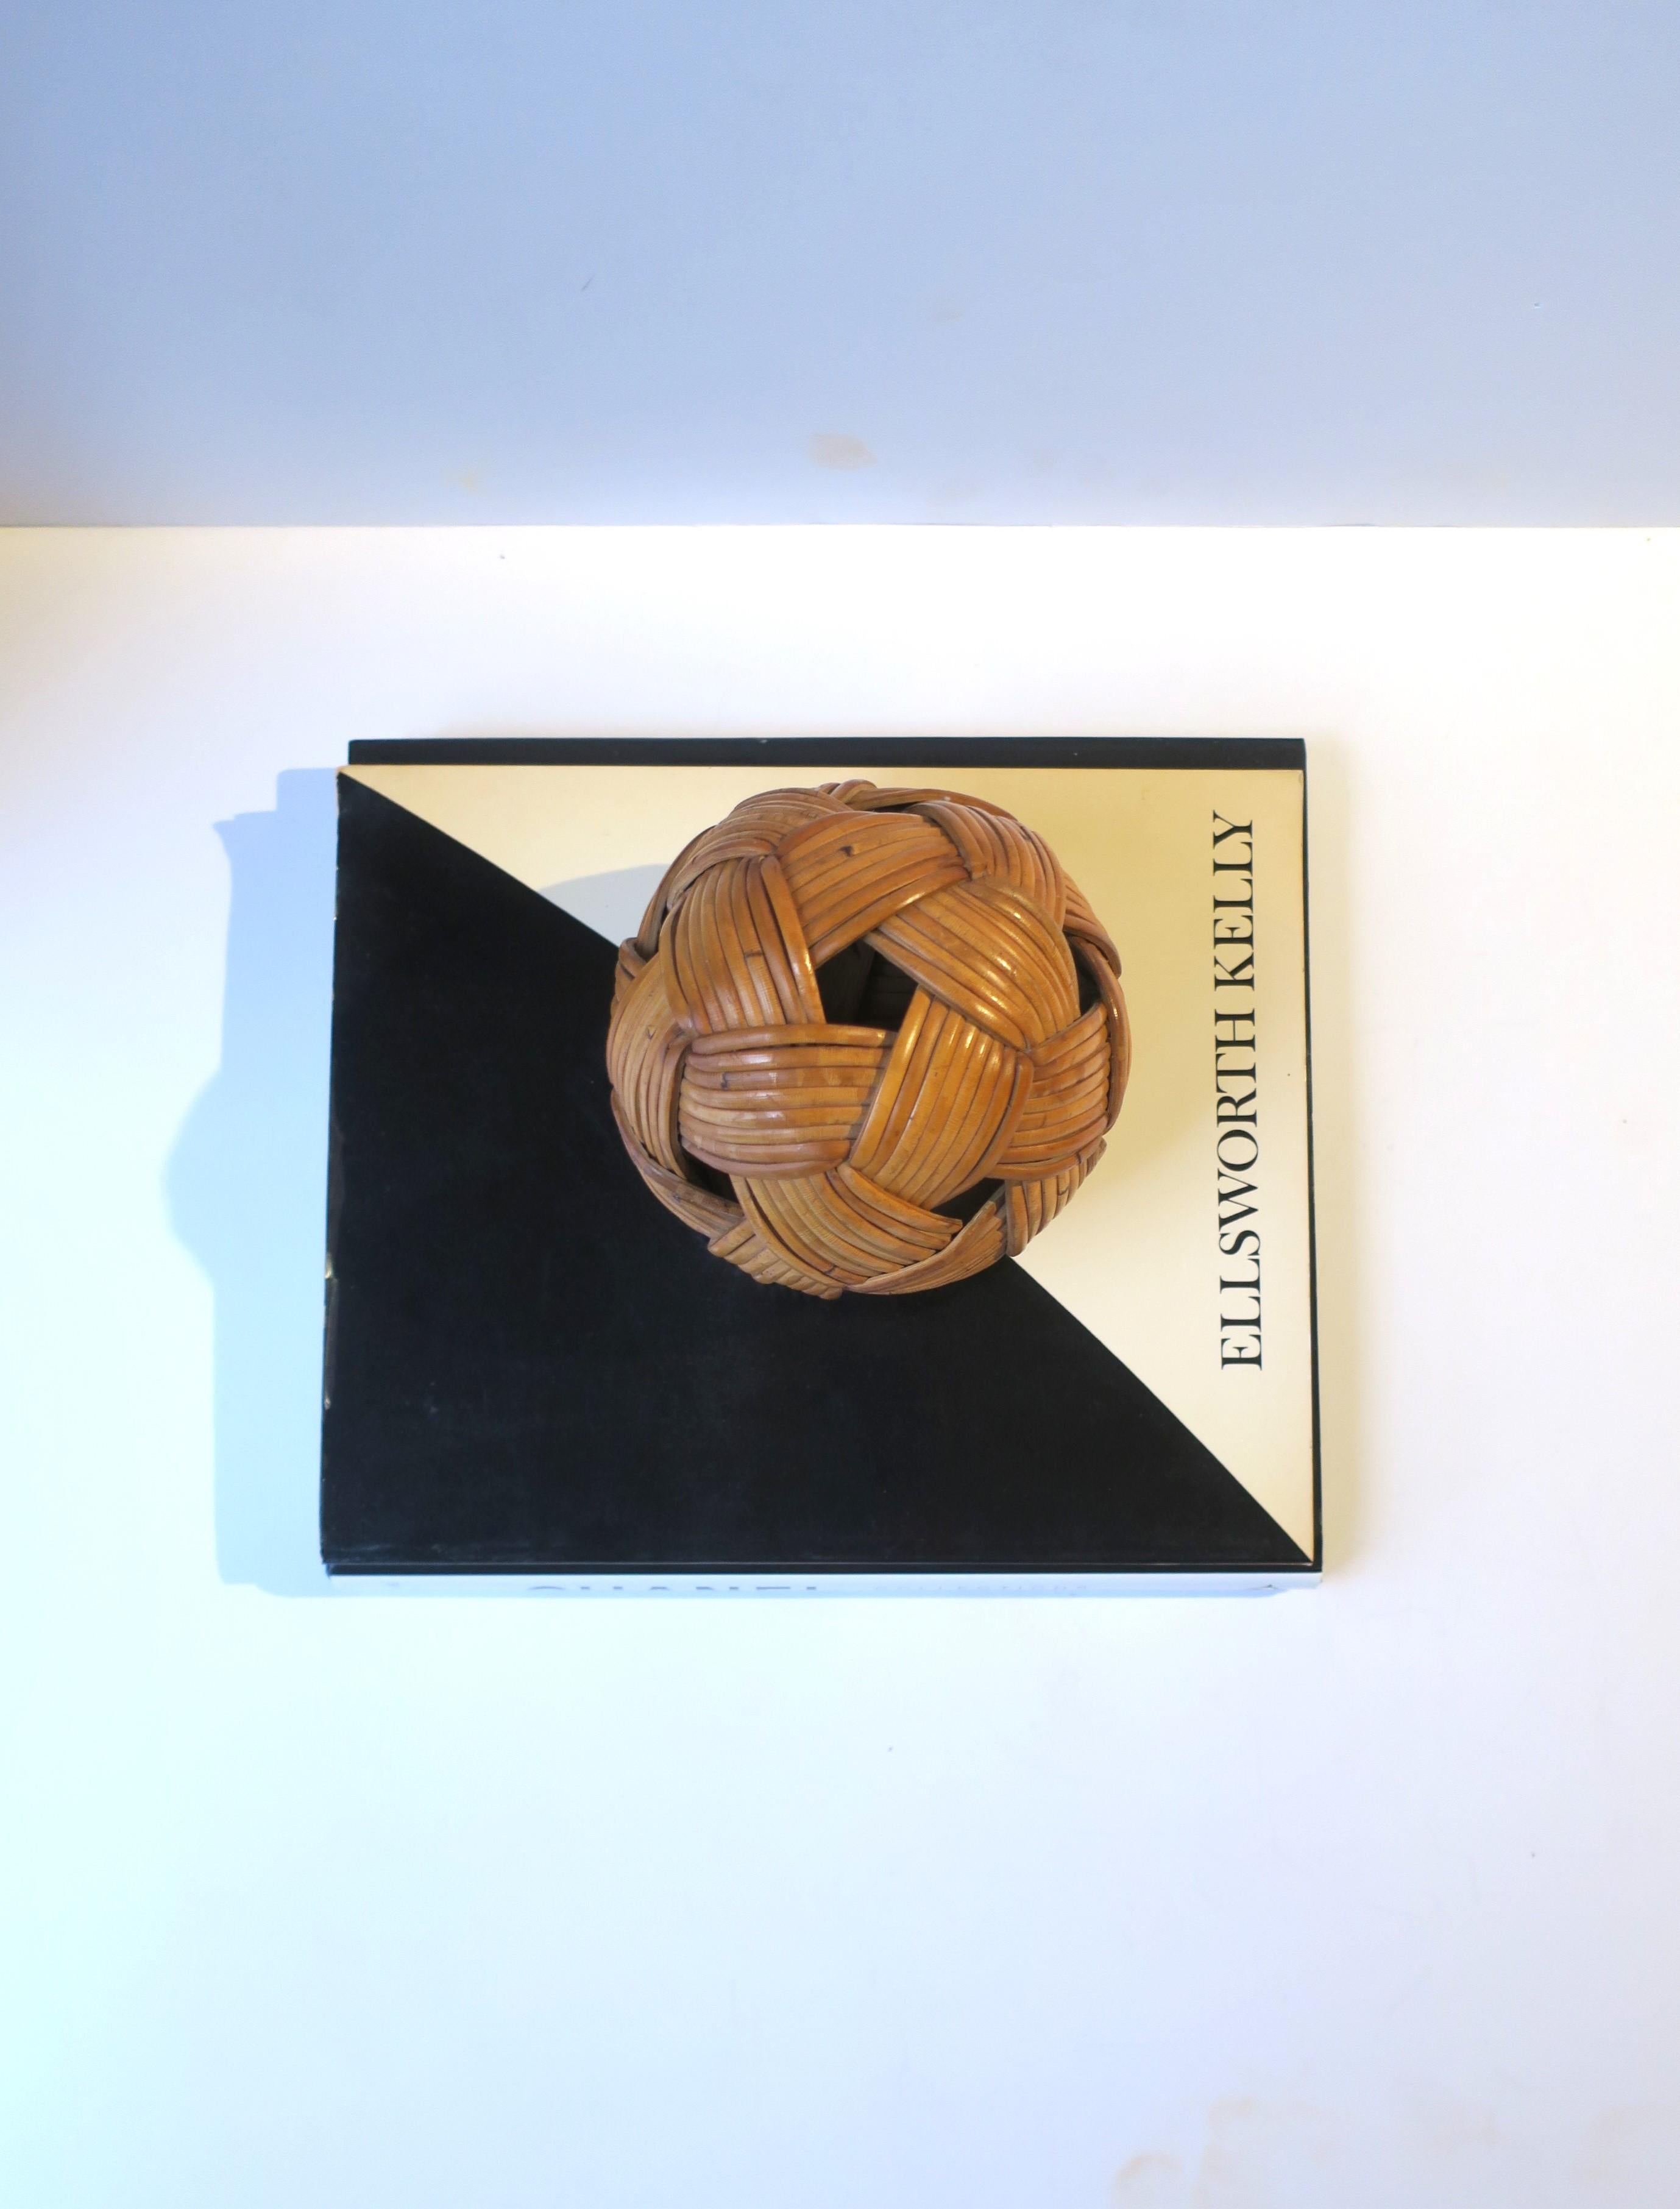 Wicker Rattan Ball Sphere Decorative Object For Sale 1